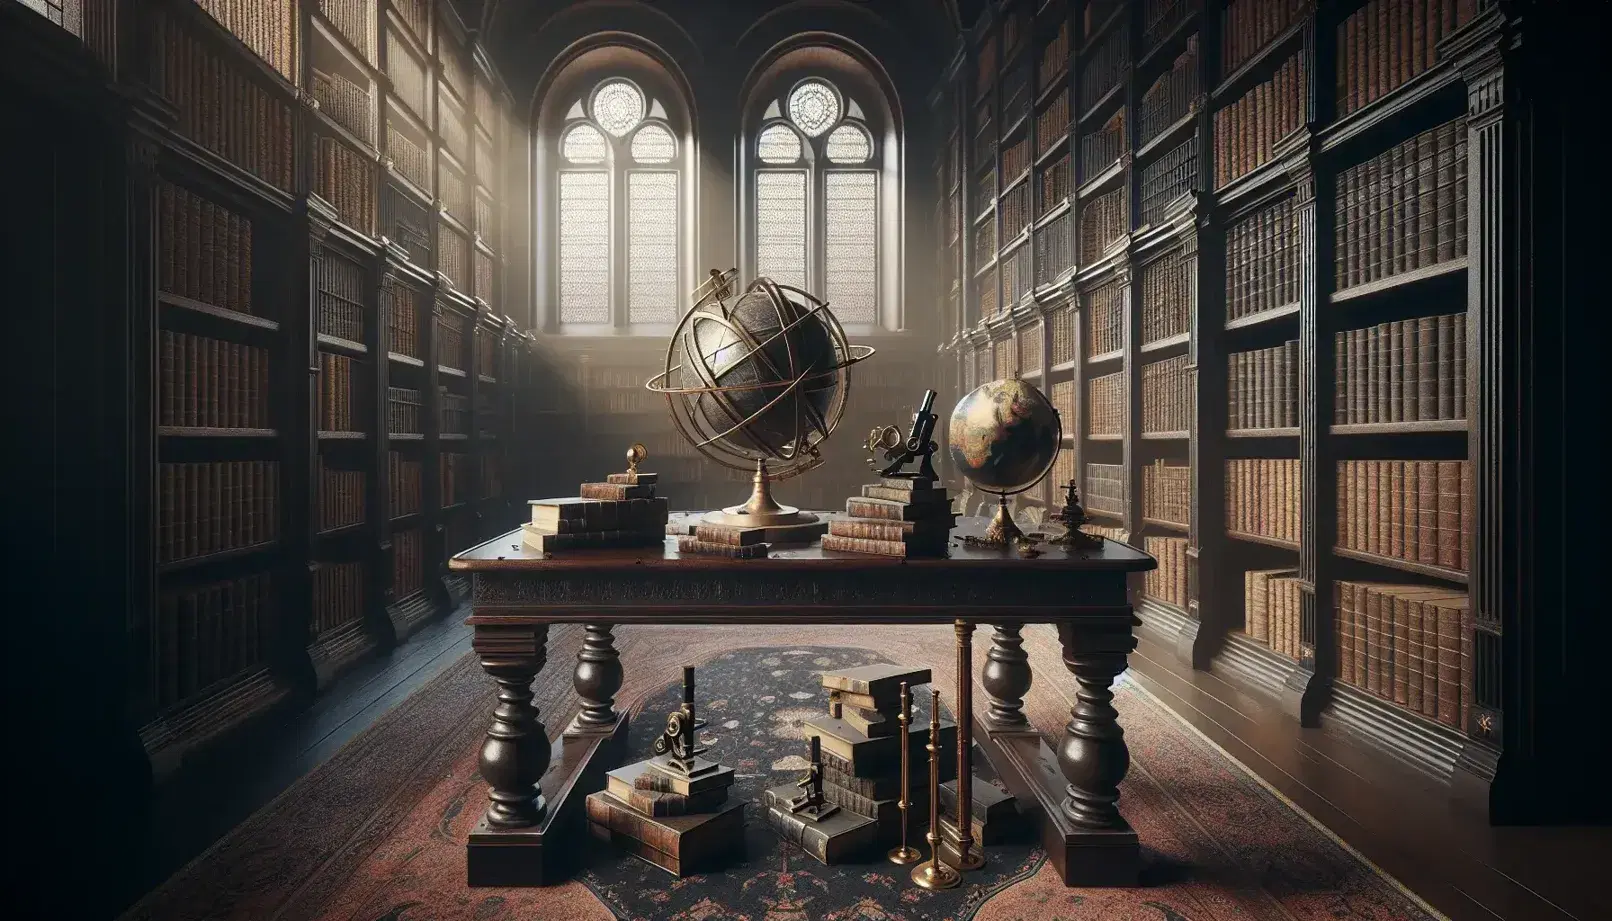 Biblioteca antigua con estantes de madera oscura repletos de libros, mesa central con esfera armilar, globo terráqueo y microscopio de latón, ventana arqueada y alfombra persa.